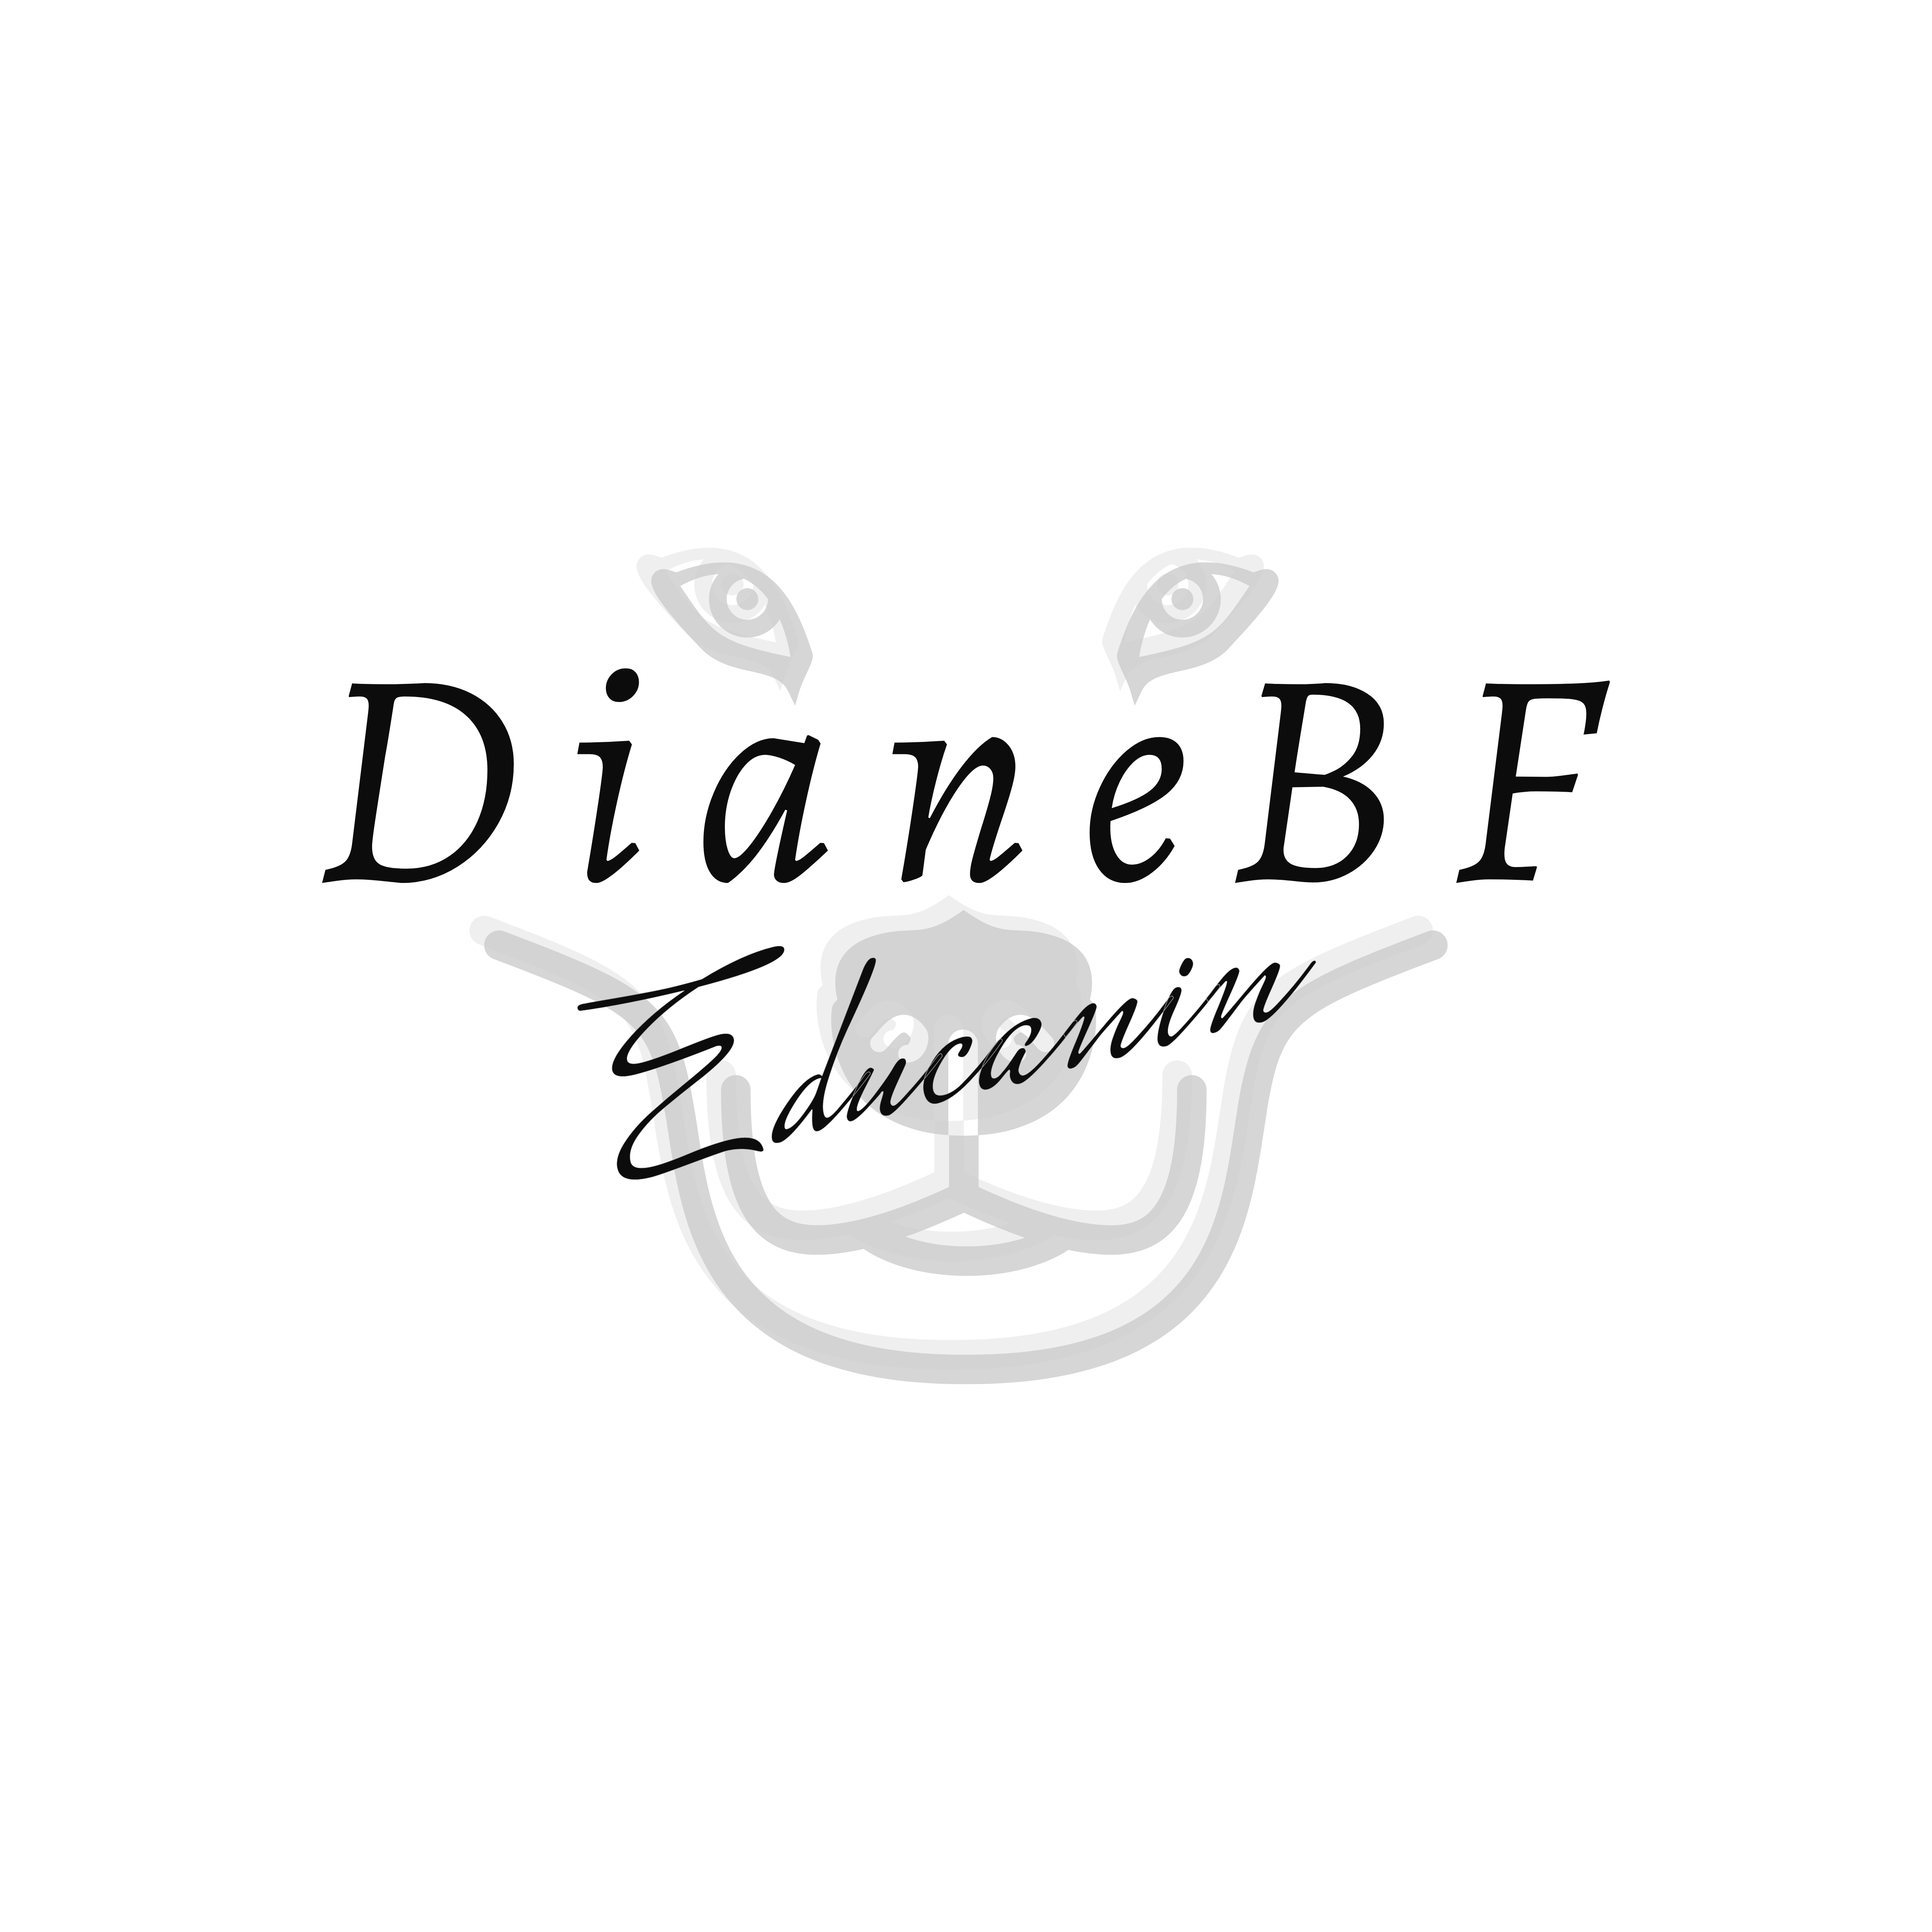 Diane BF Educanin.png